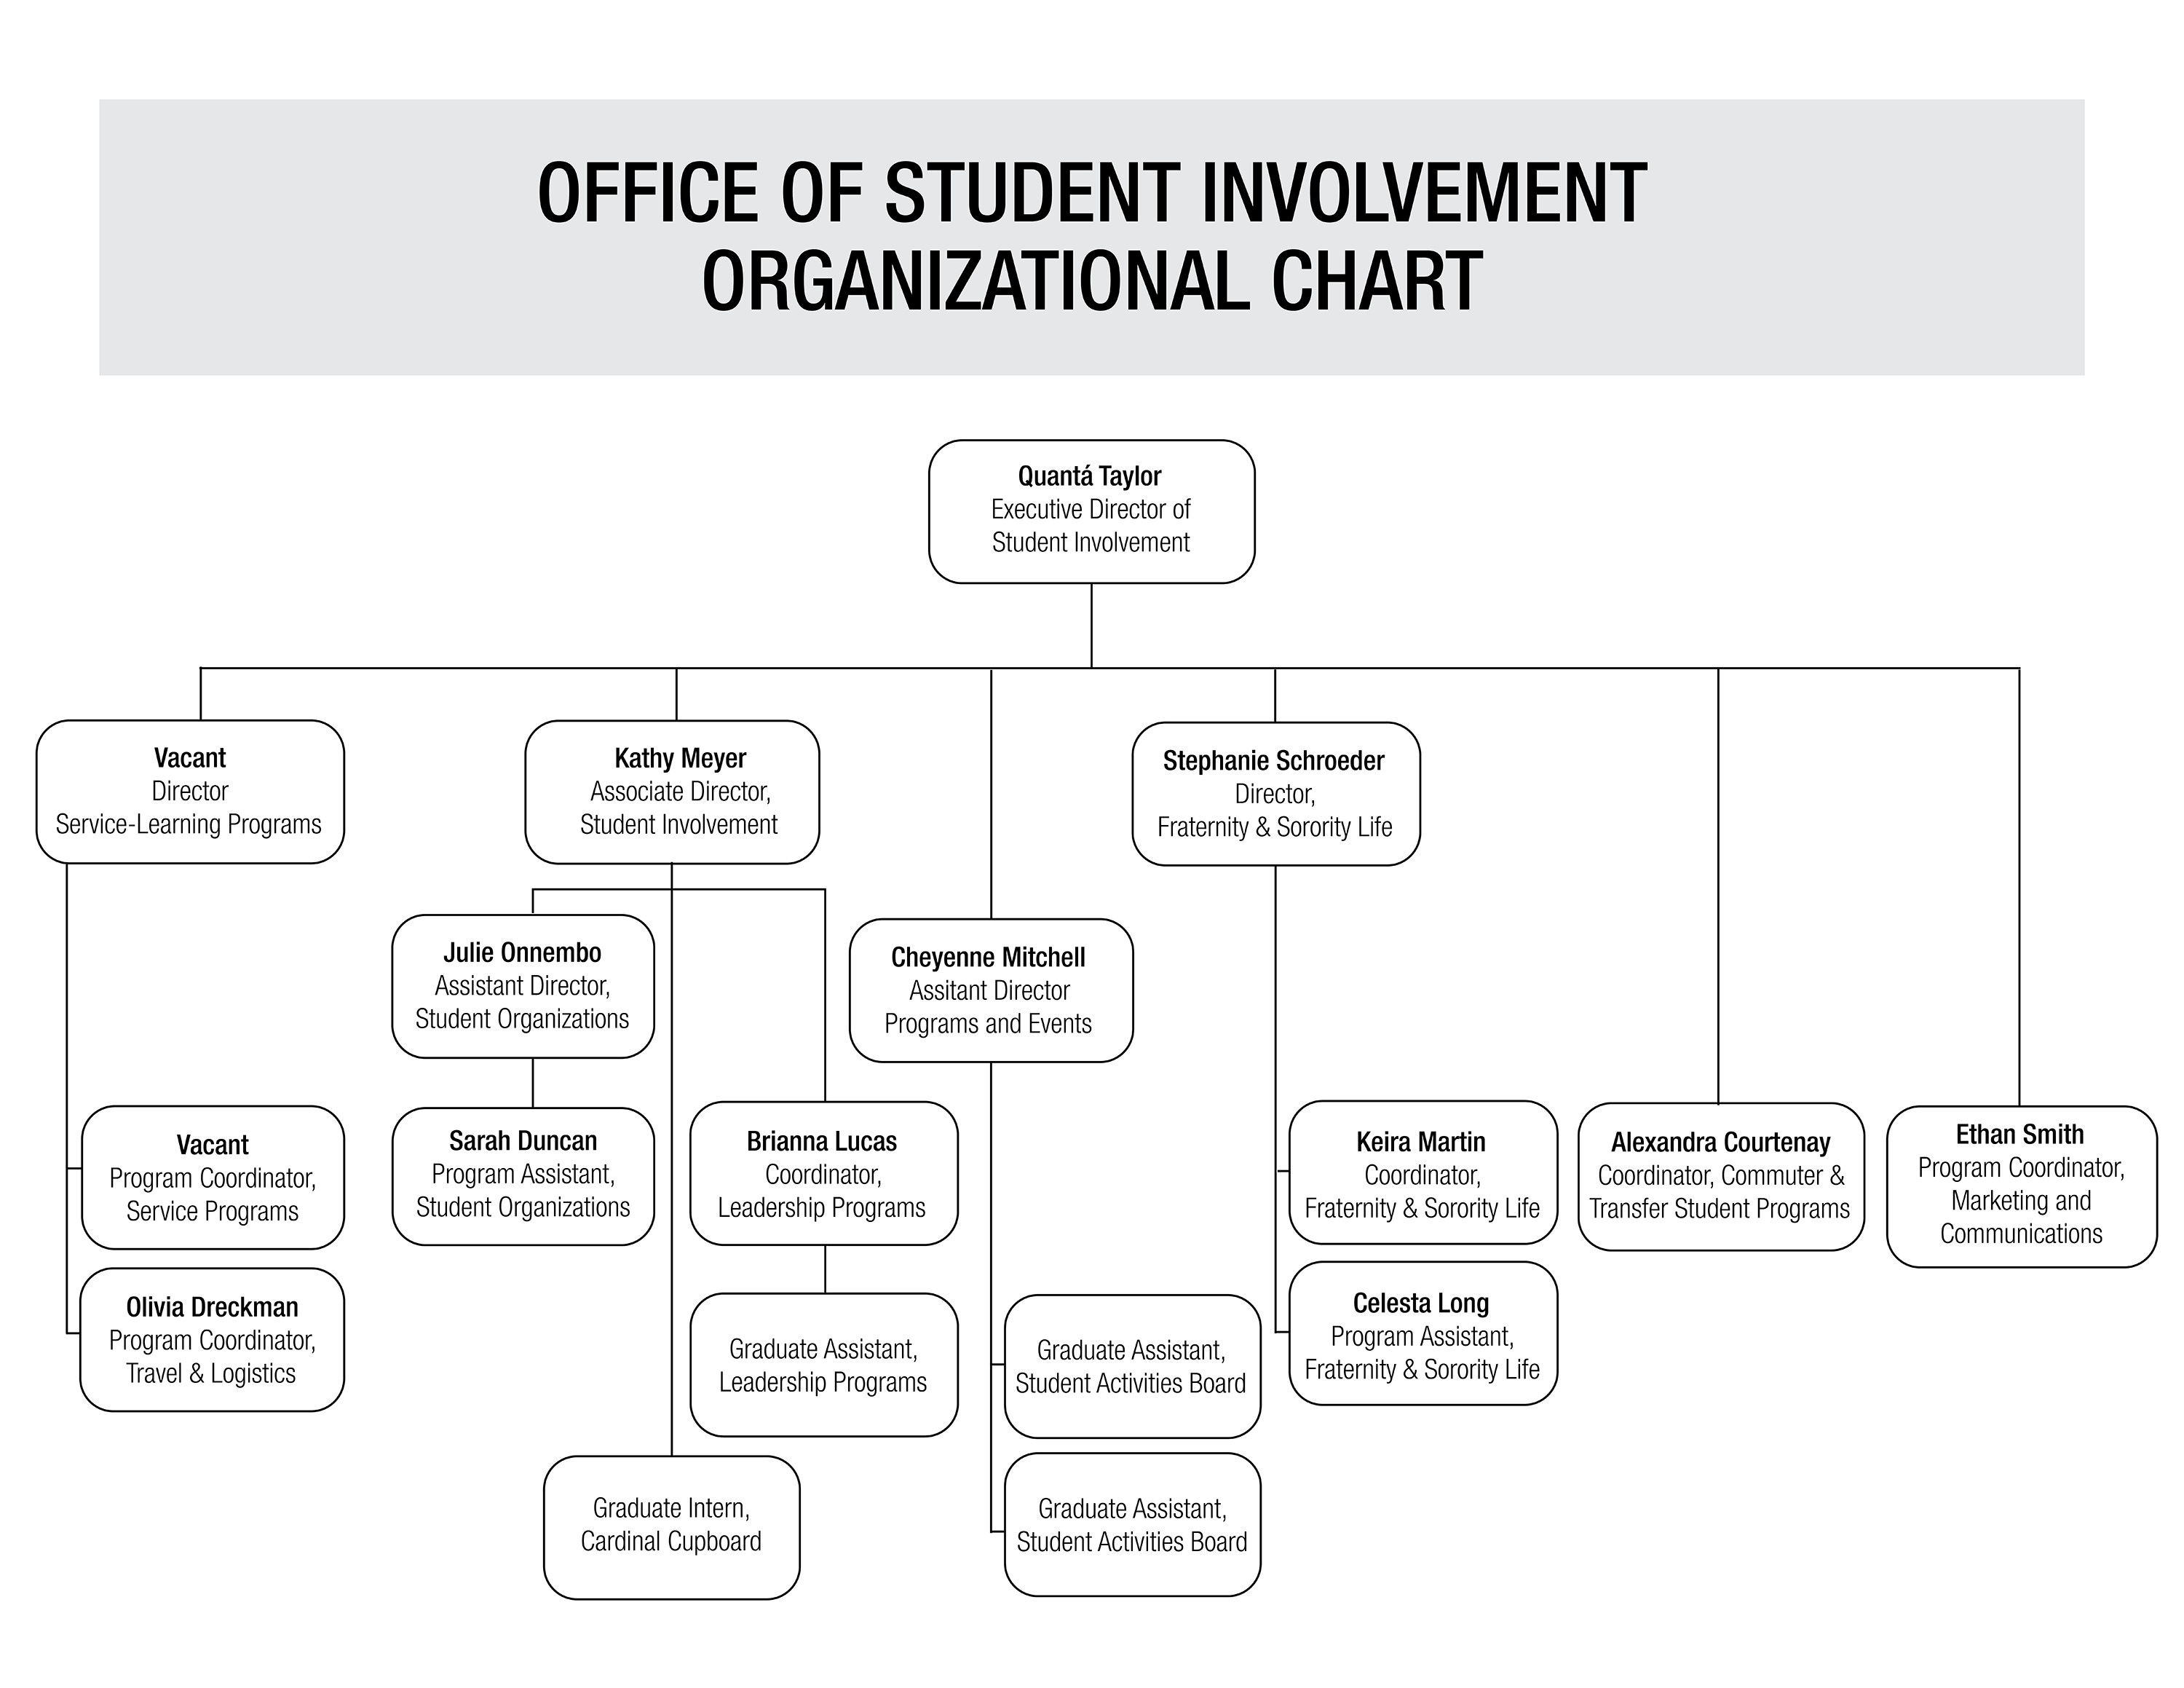 University of Louisville Office of Student Involvement Organizational chart